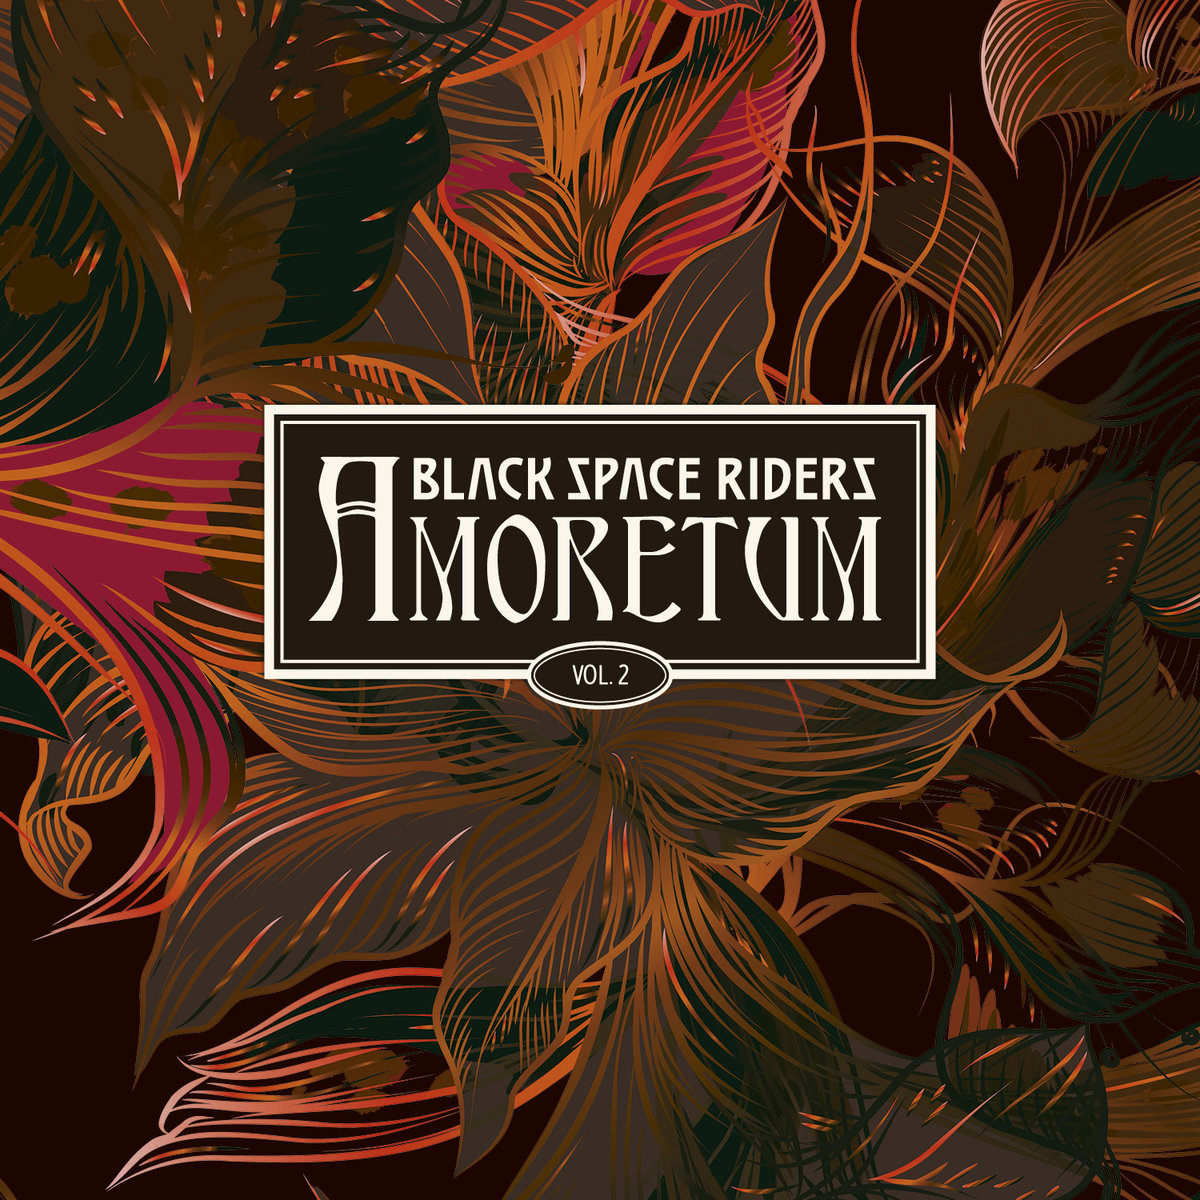 Black Space Riders Amoretum Vol. 2